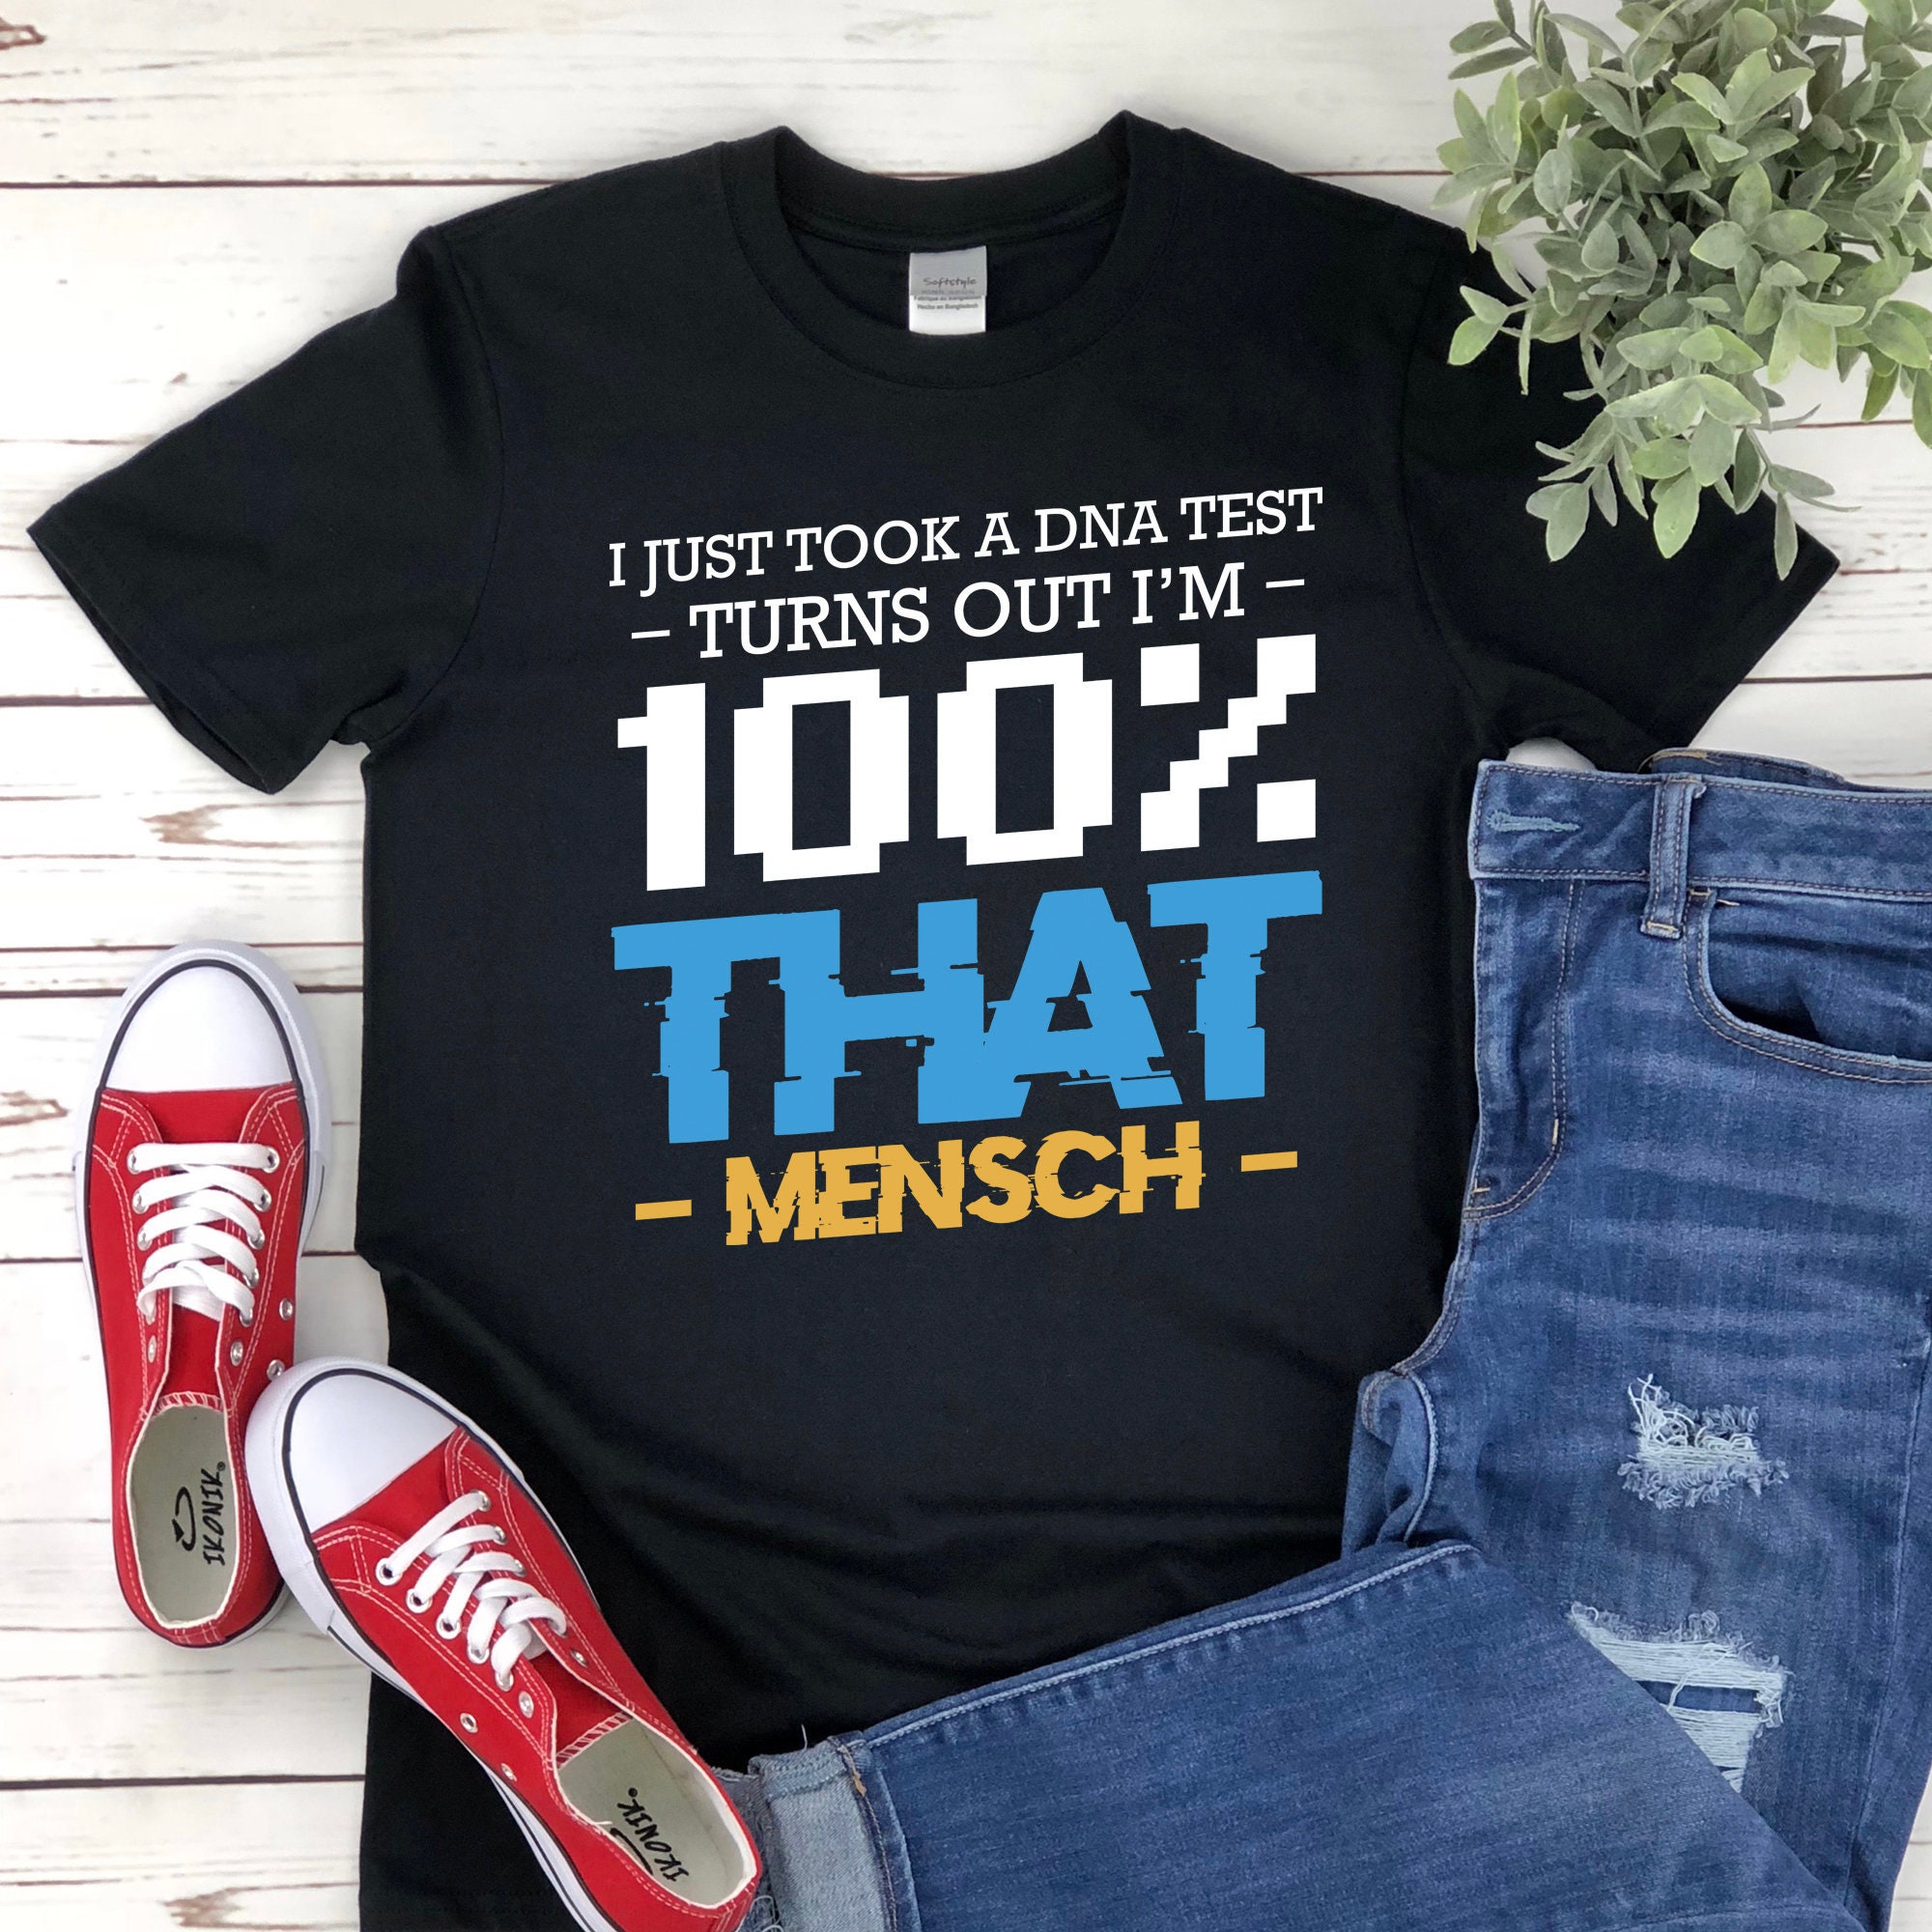 Chutzpah T-Shirt 100% Cotton Comfortable High-Quality Jewish Mazel Tov  Mensch Yenta Nice Njg